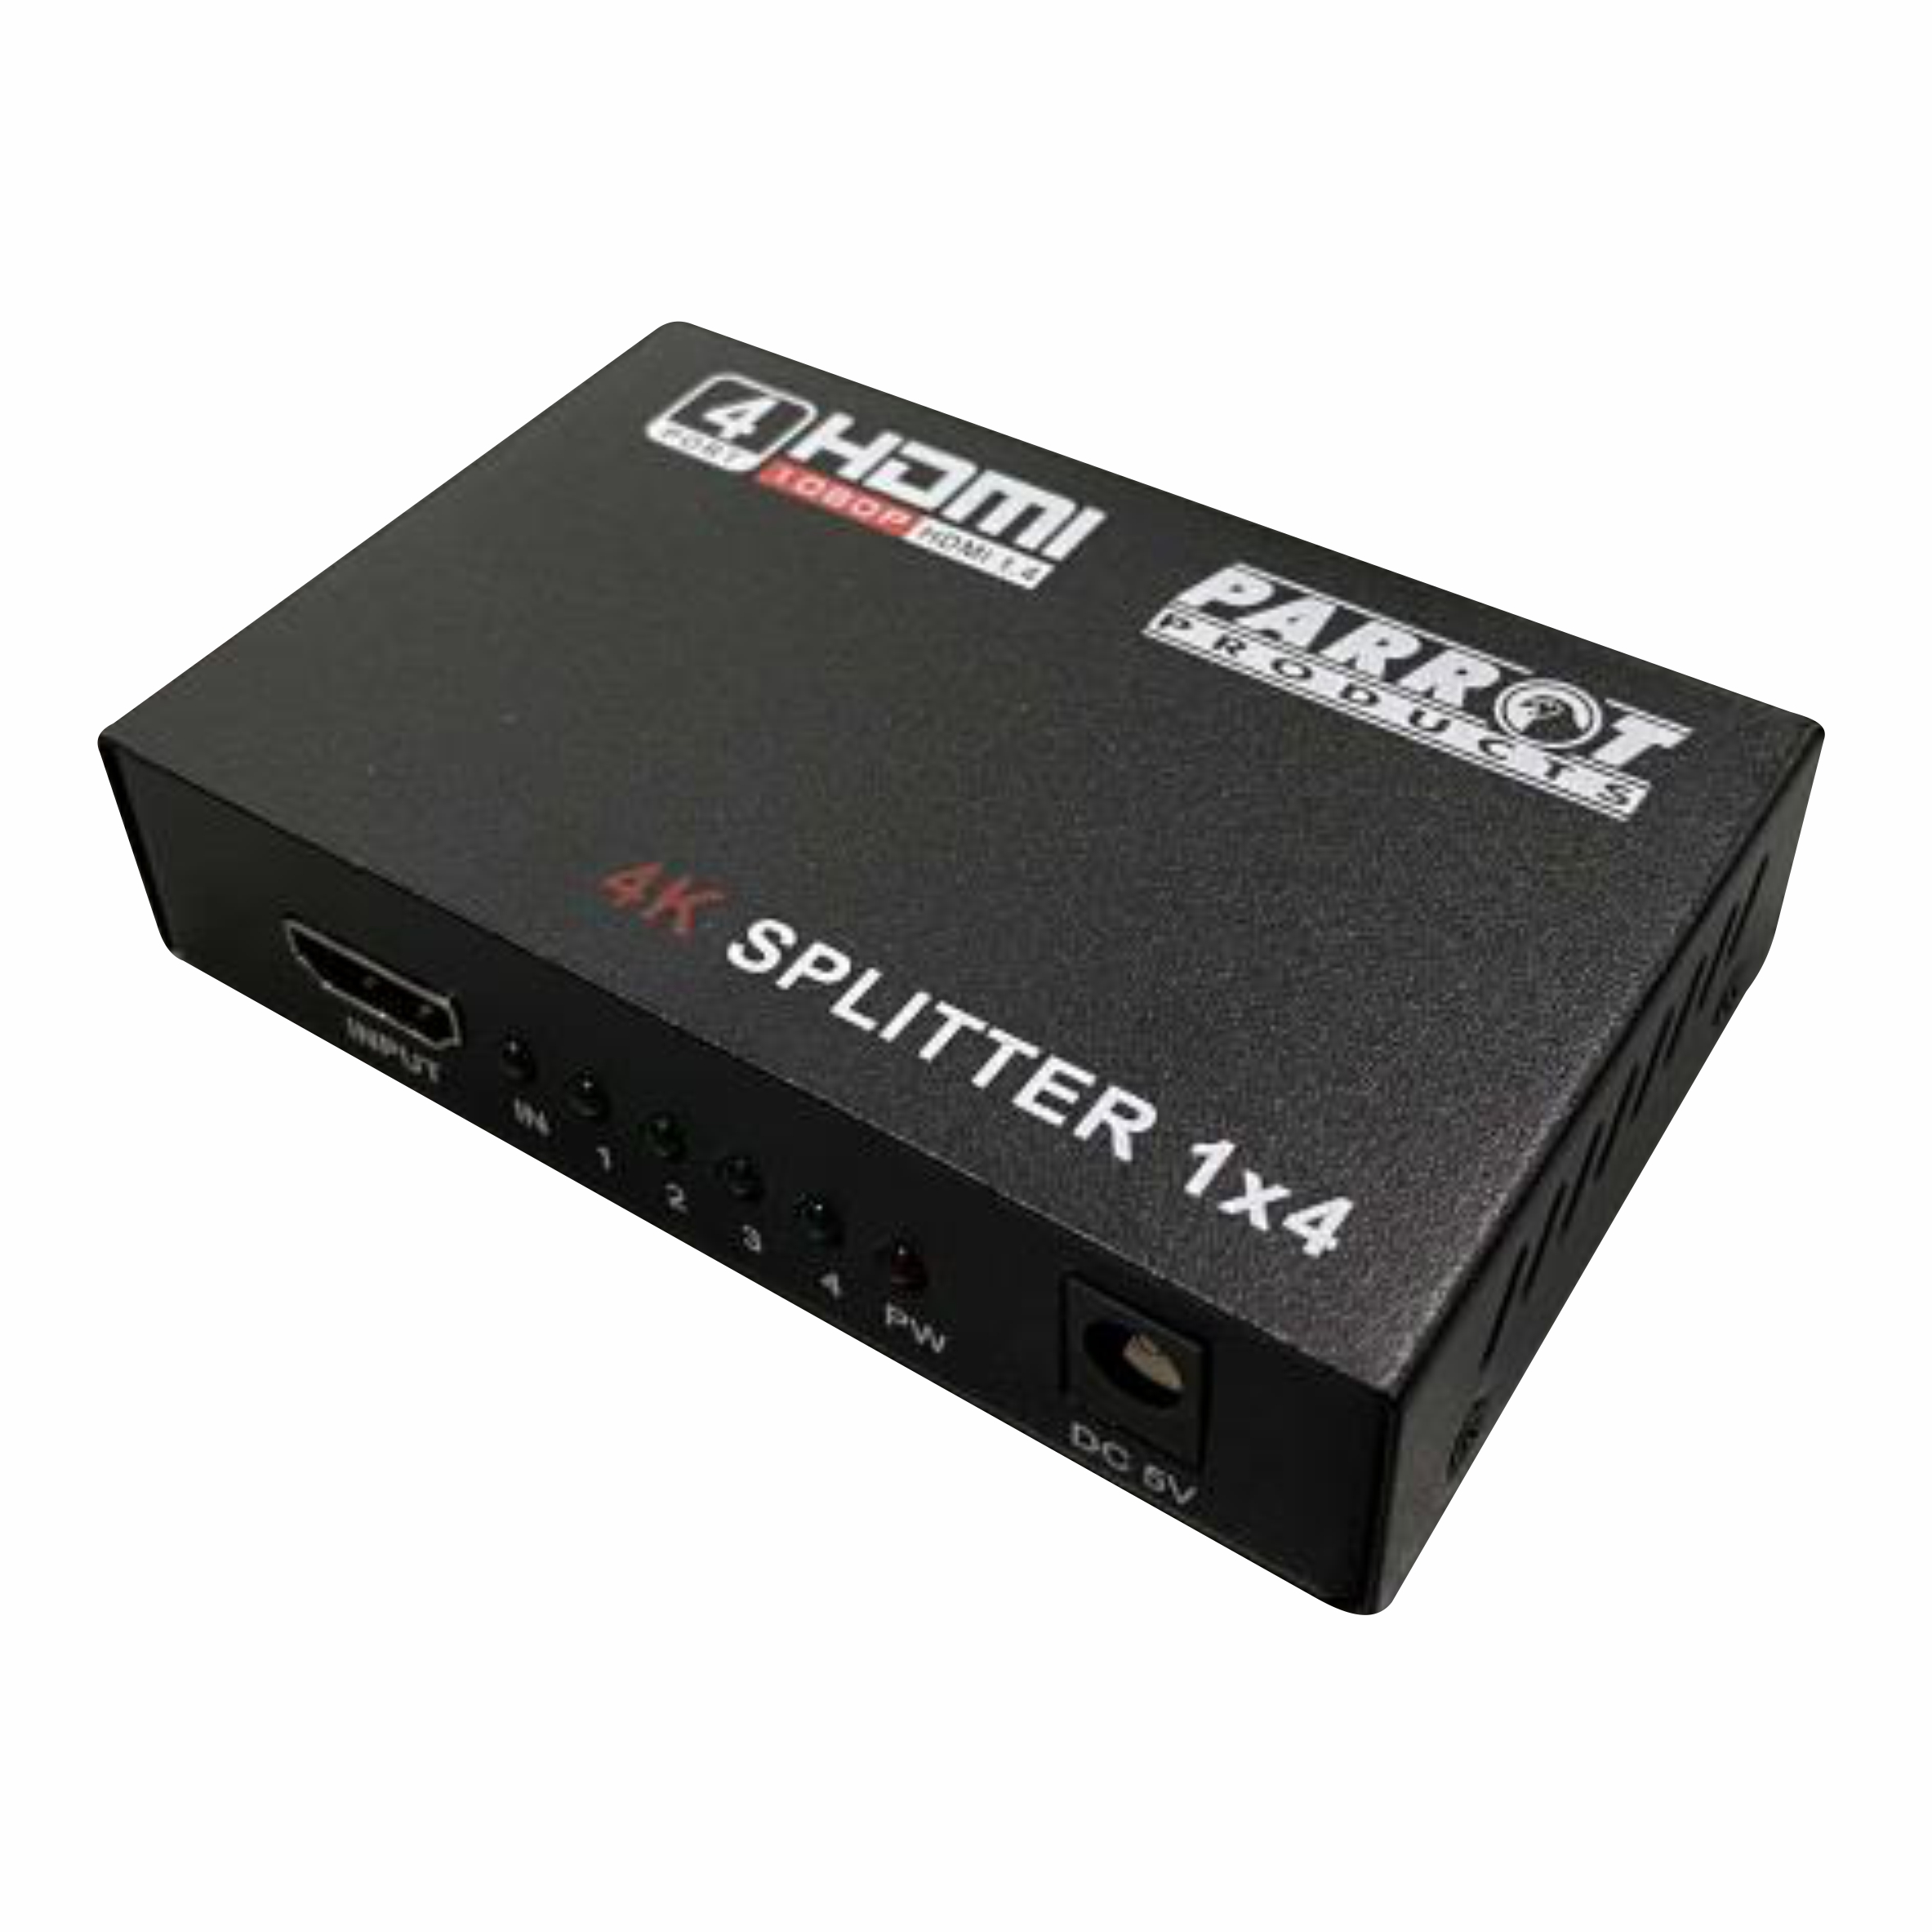 1 to 4 HDMI Splitter